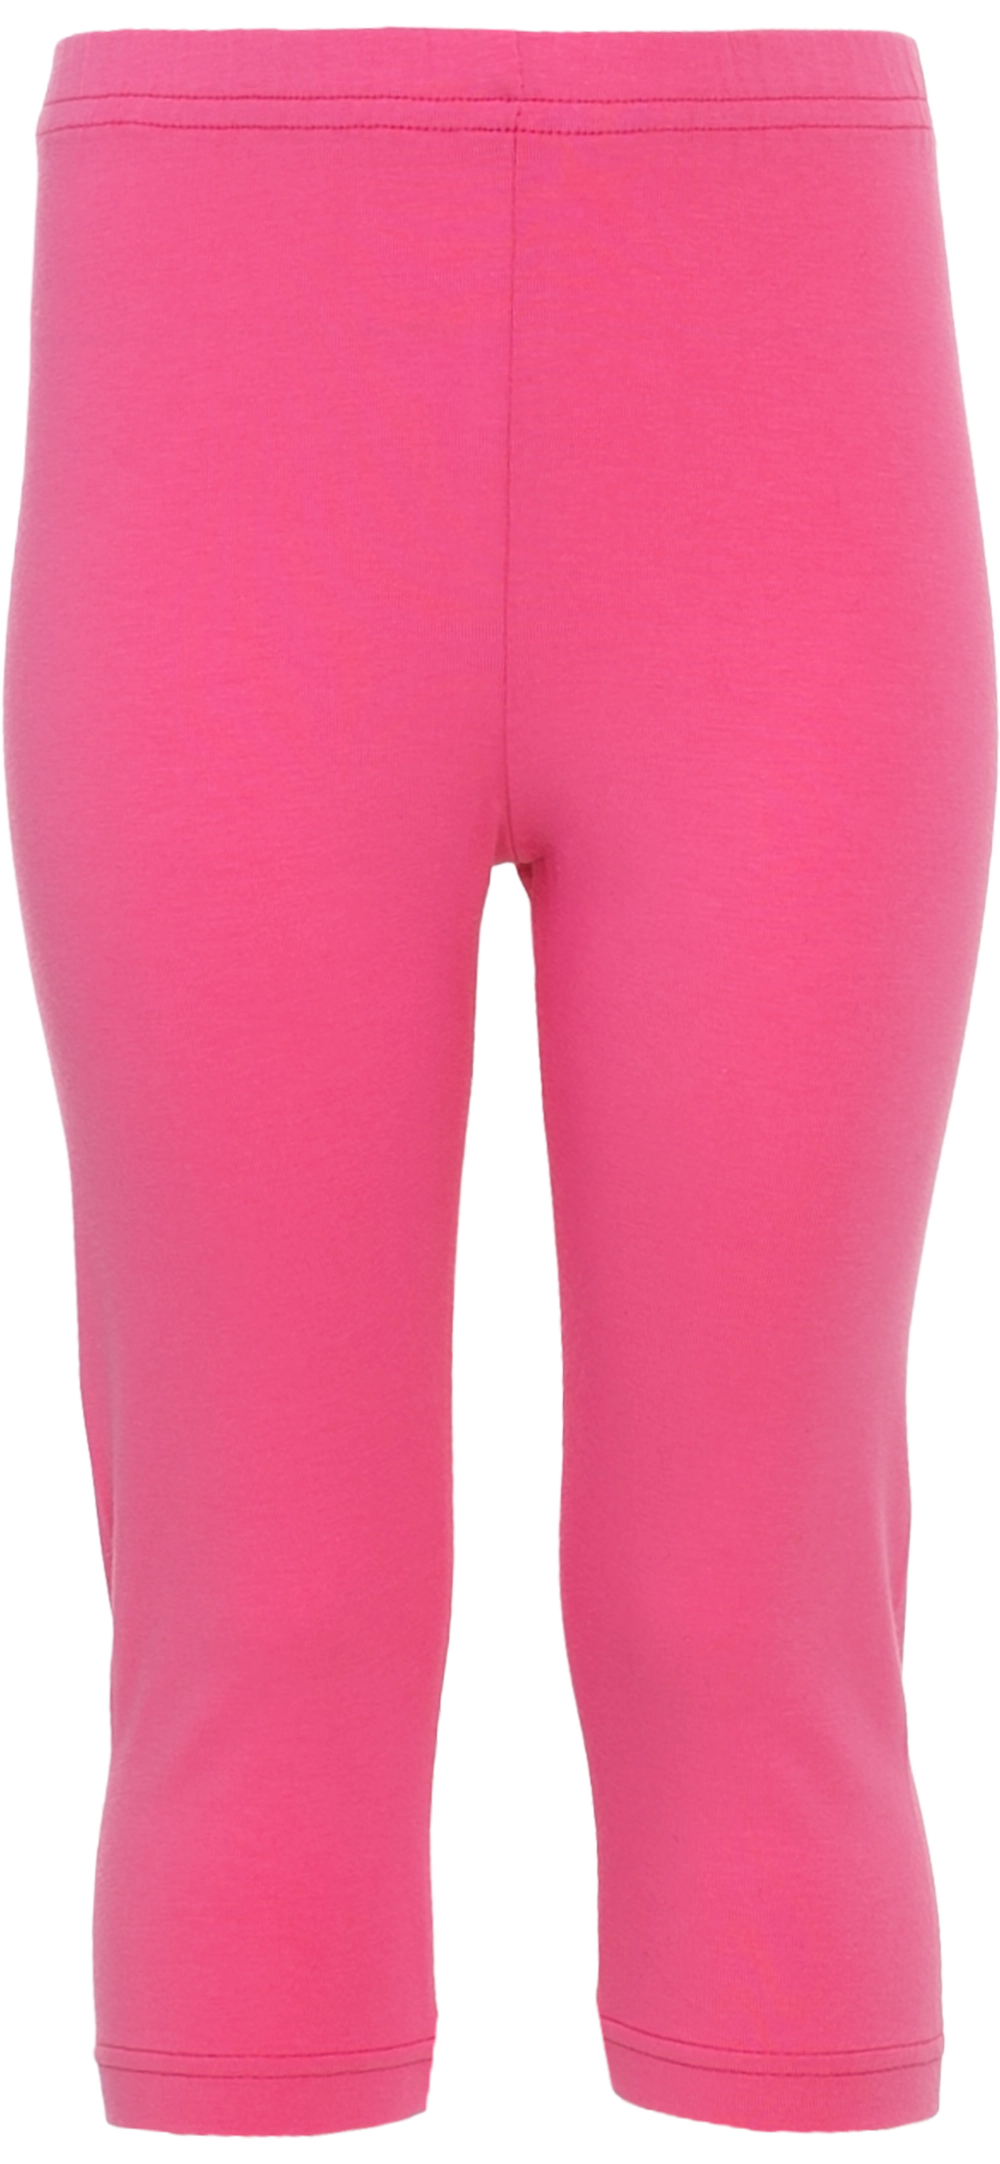 HENNI capri leggings, pink - PaaPii Design